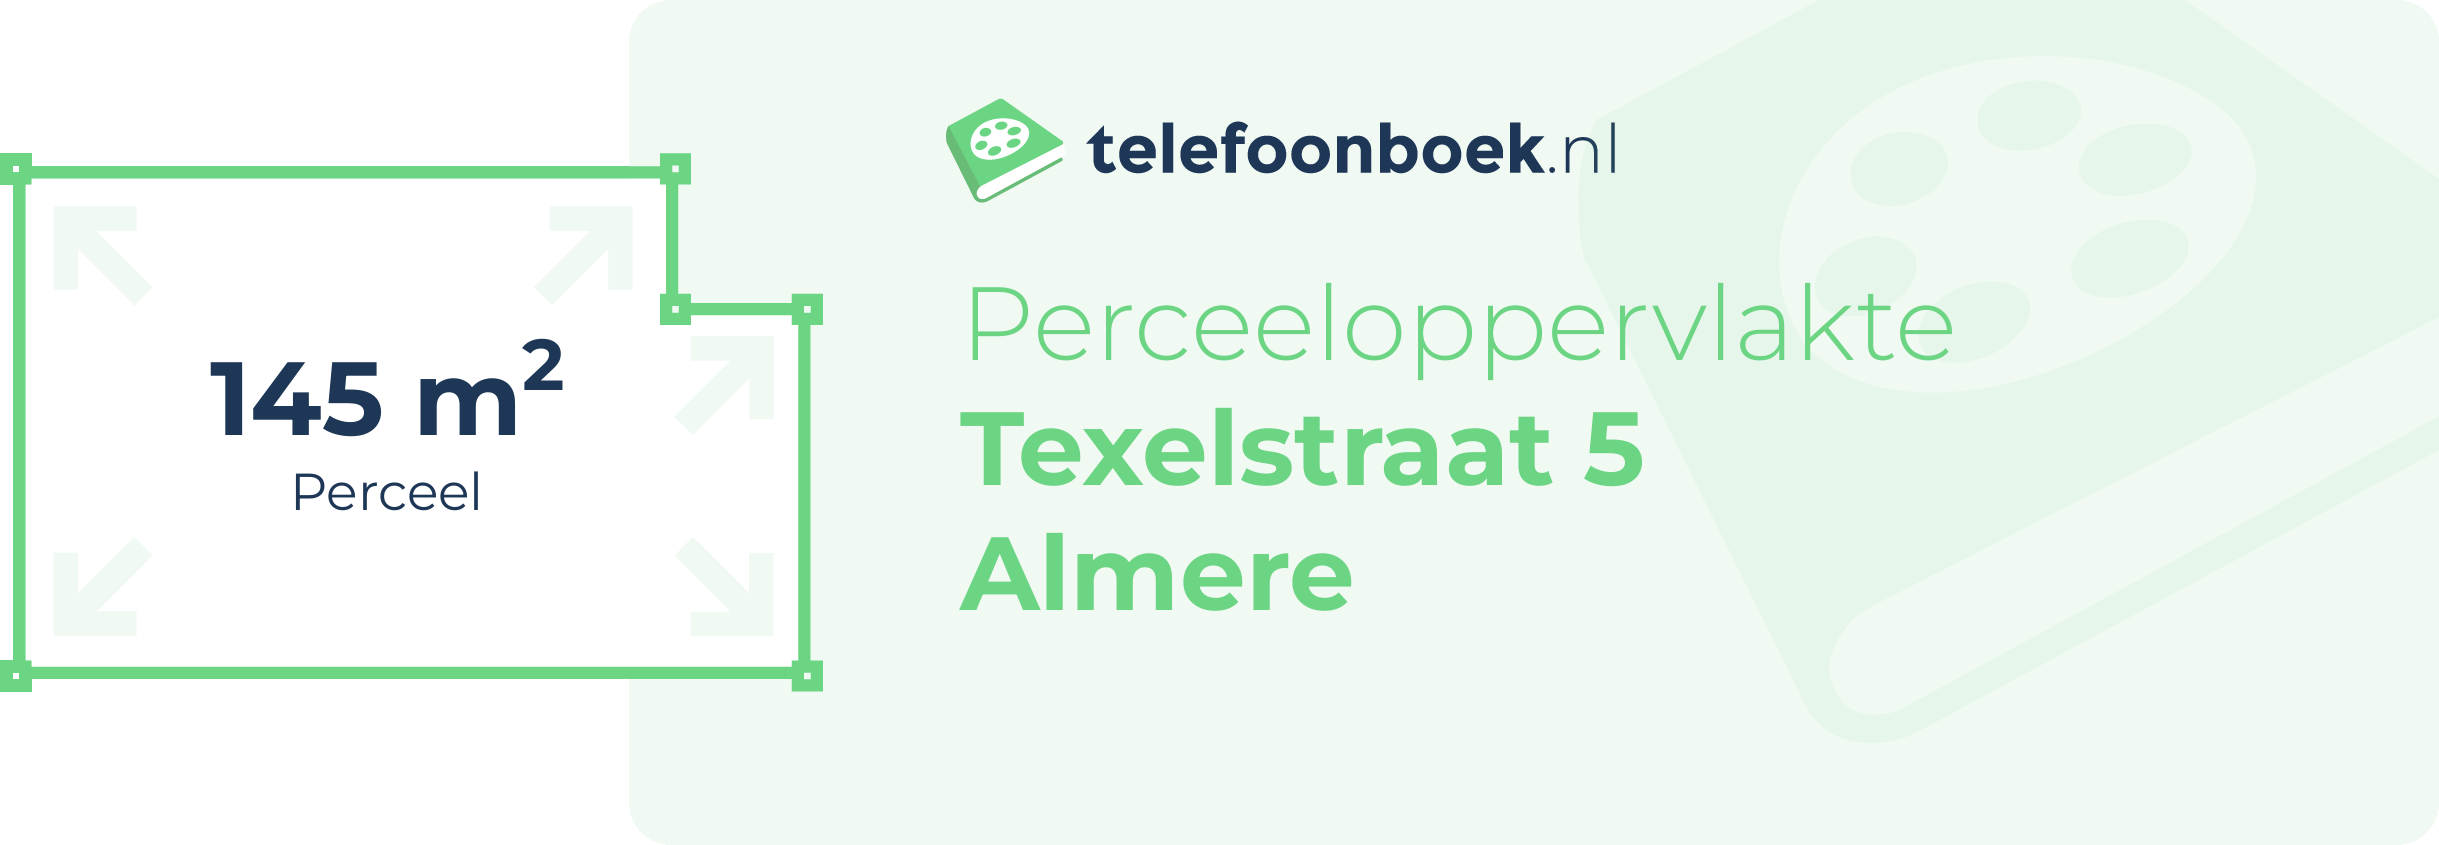 Perceeloppervlakte Texelstraat 5 Almere